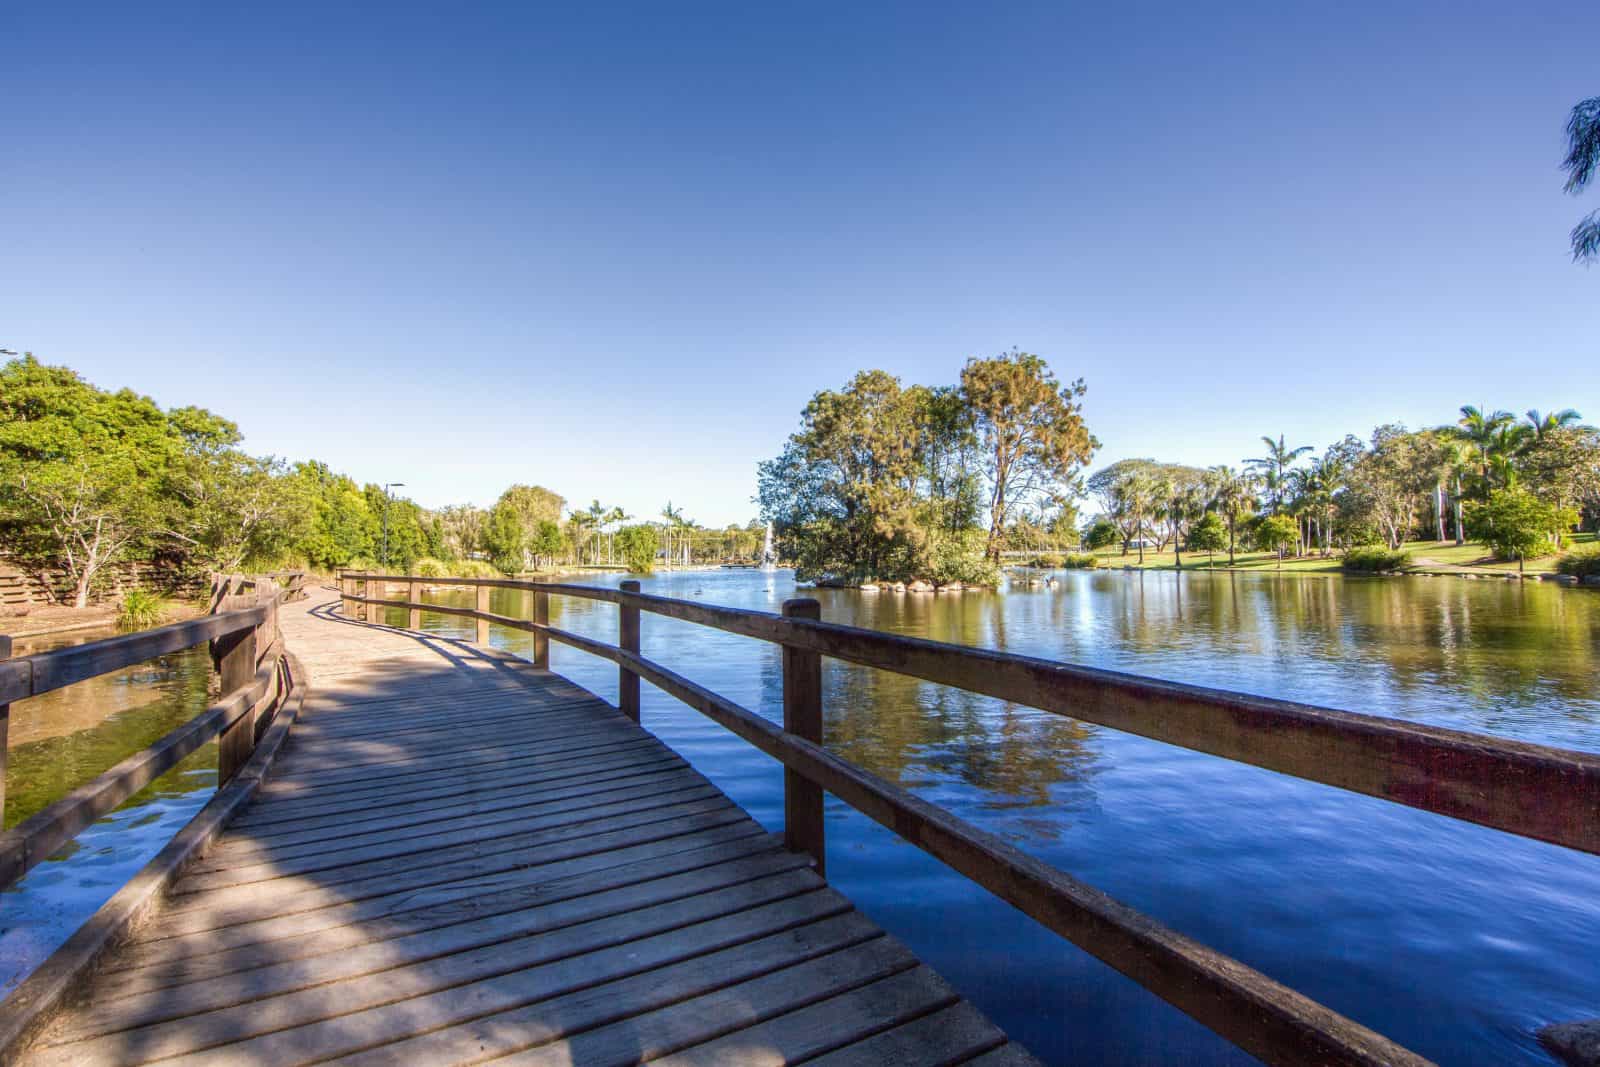 Centenary_Lakes_Sunny_Bridge_Visit_Moreton_Bay_Region